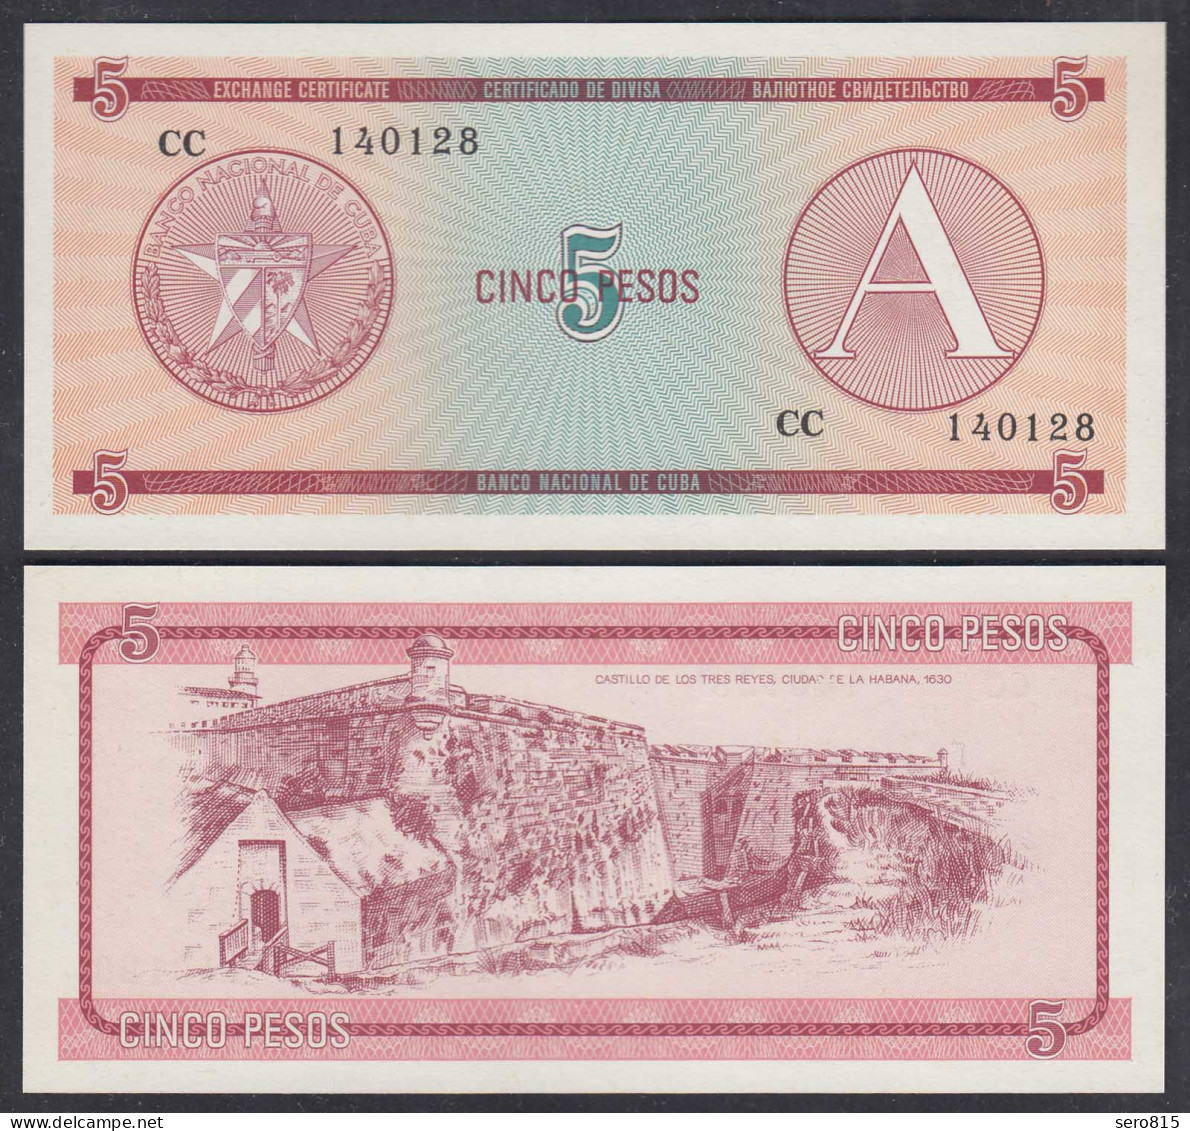 Kuba - Cuba 5 Peso Foreign Exchange Certificates 1985 Pick FX3 UNC (1)  (26793 - Altri – America